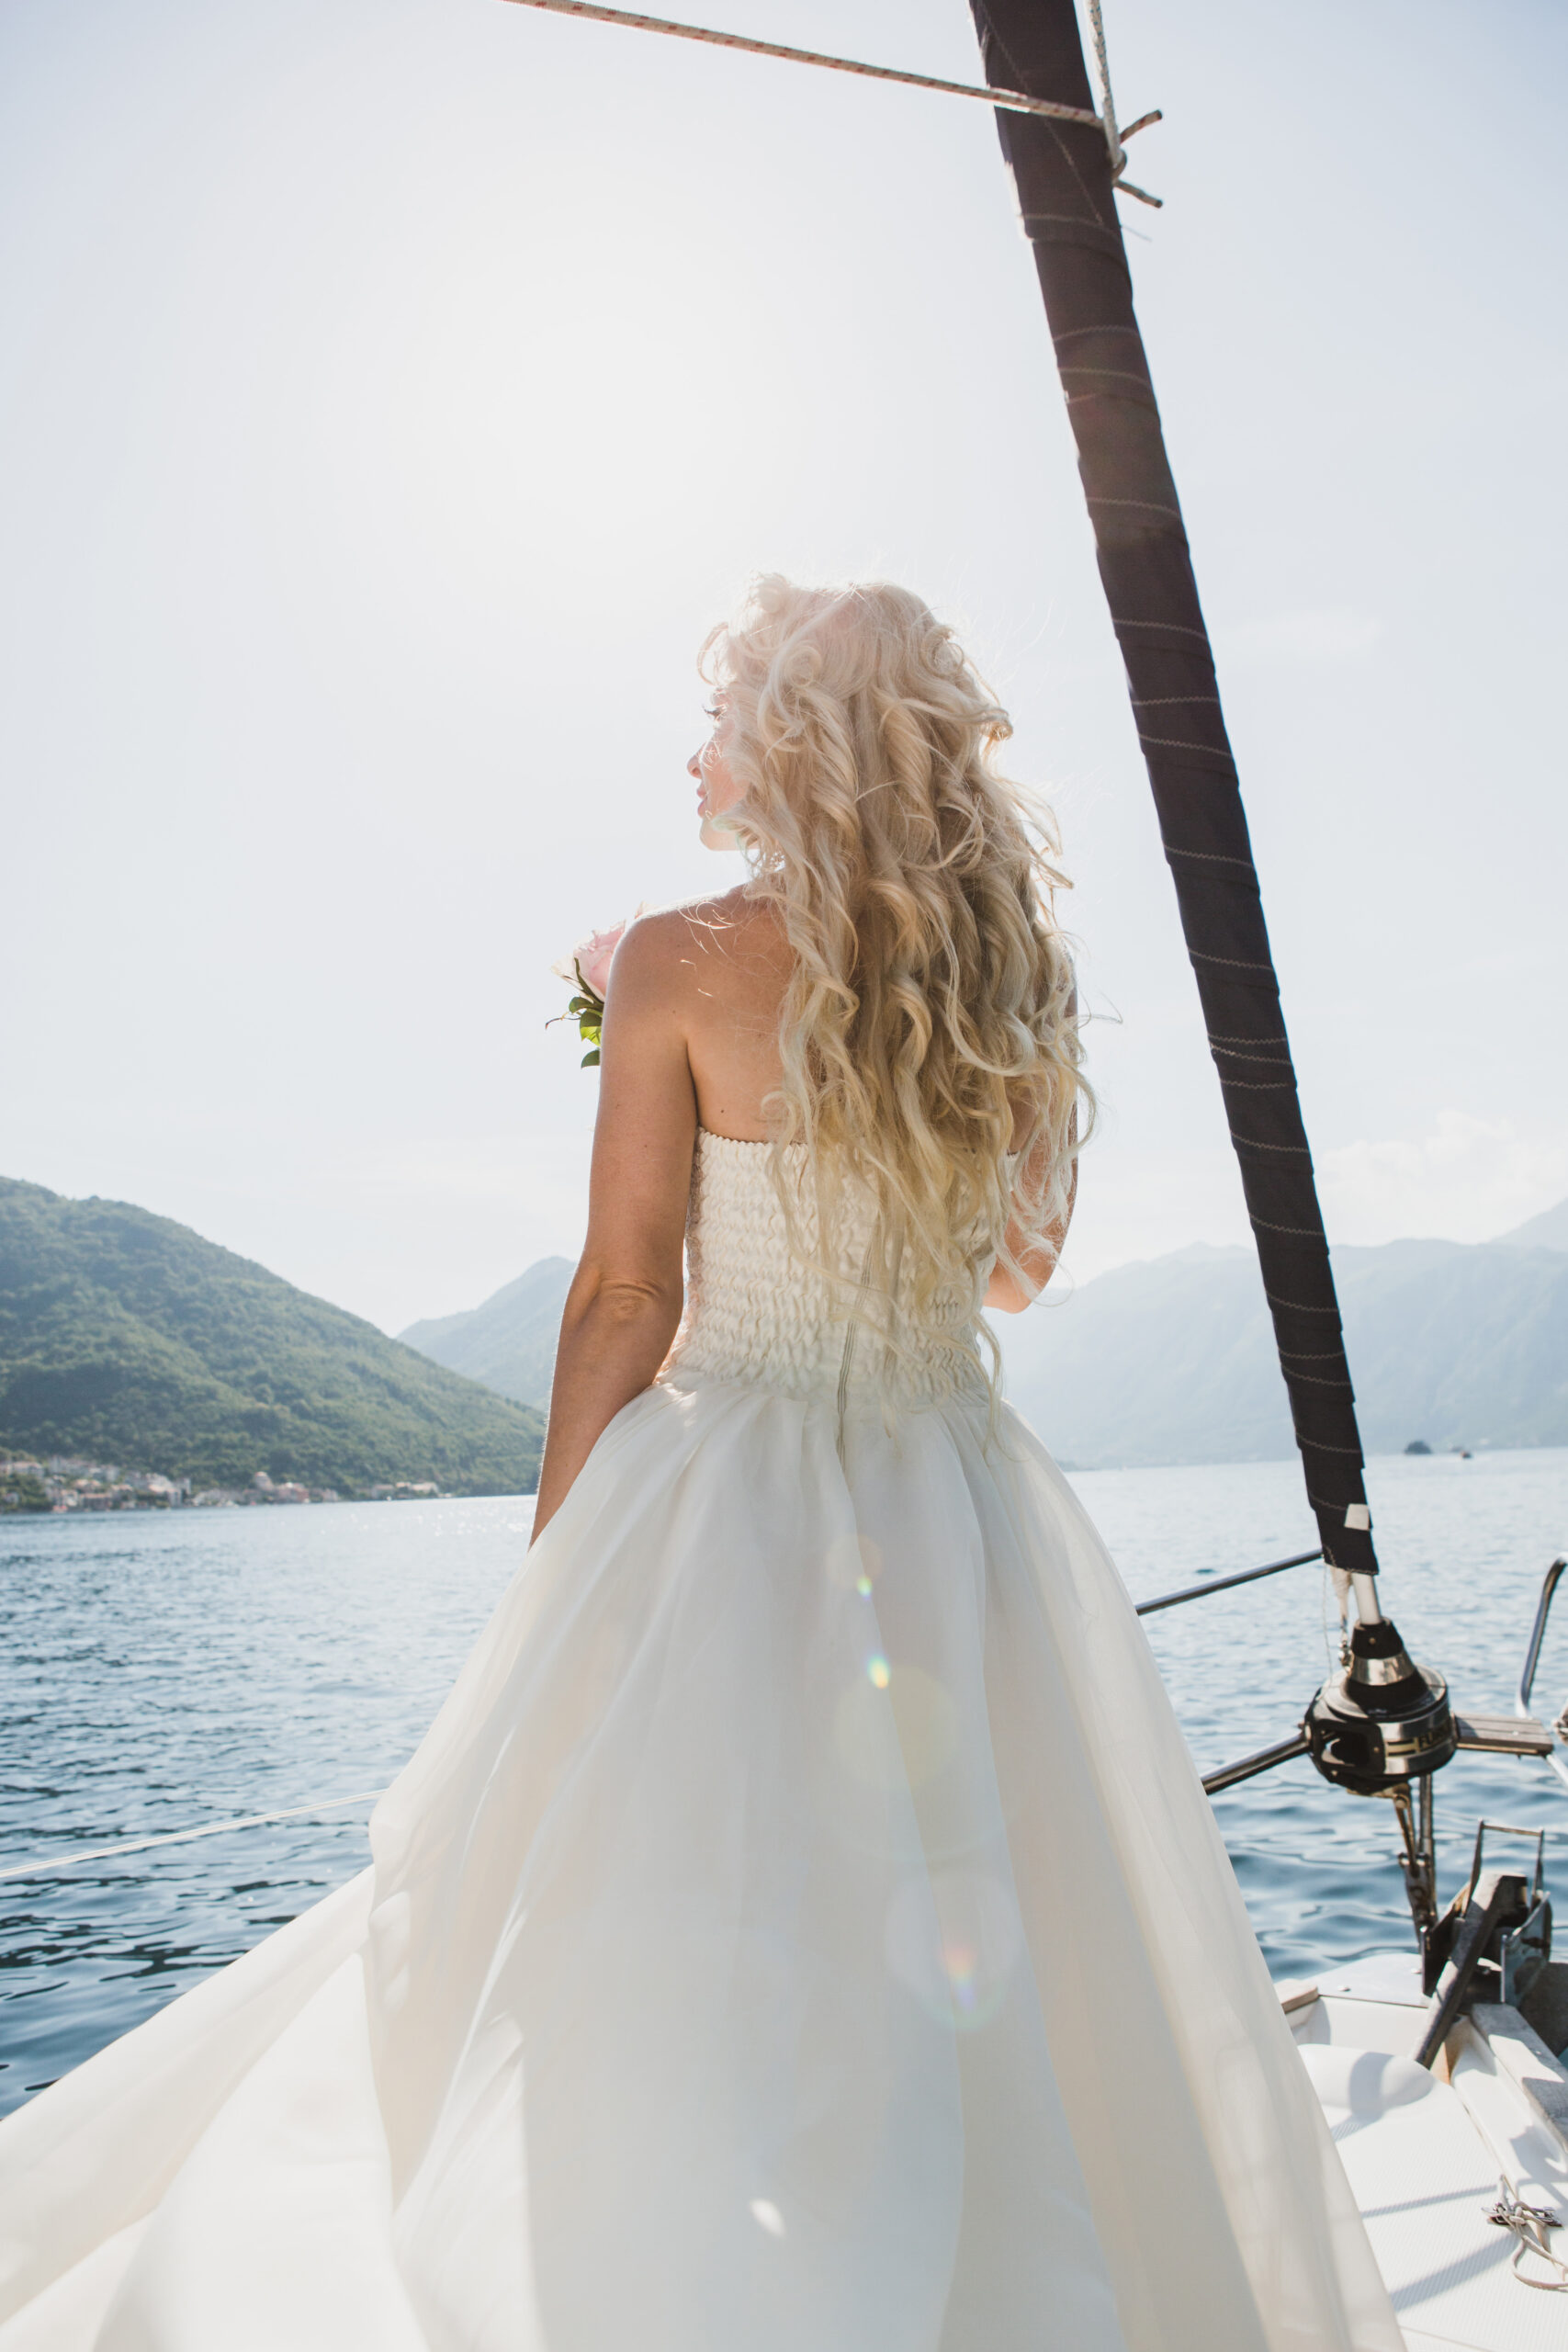 Wedding Whitsunday Sailing - Boat hire - Marry me on a Catamaran!